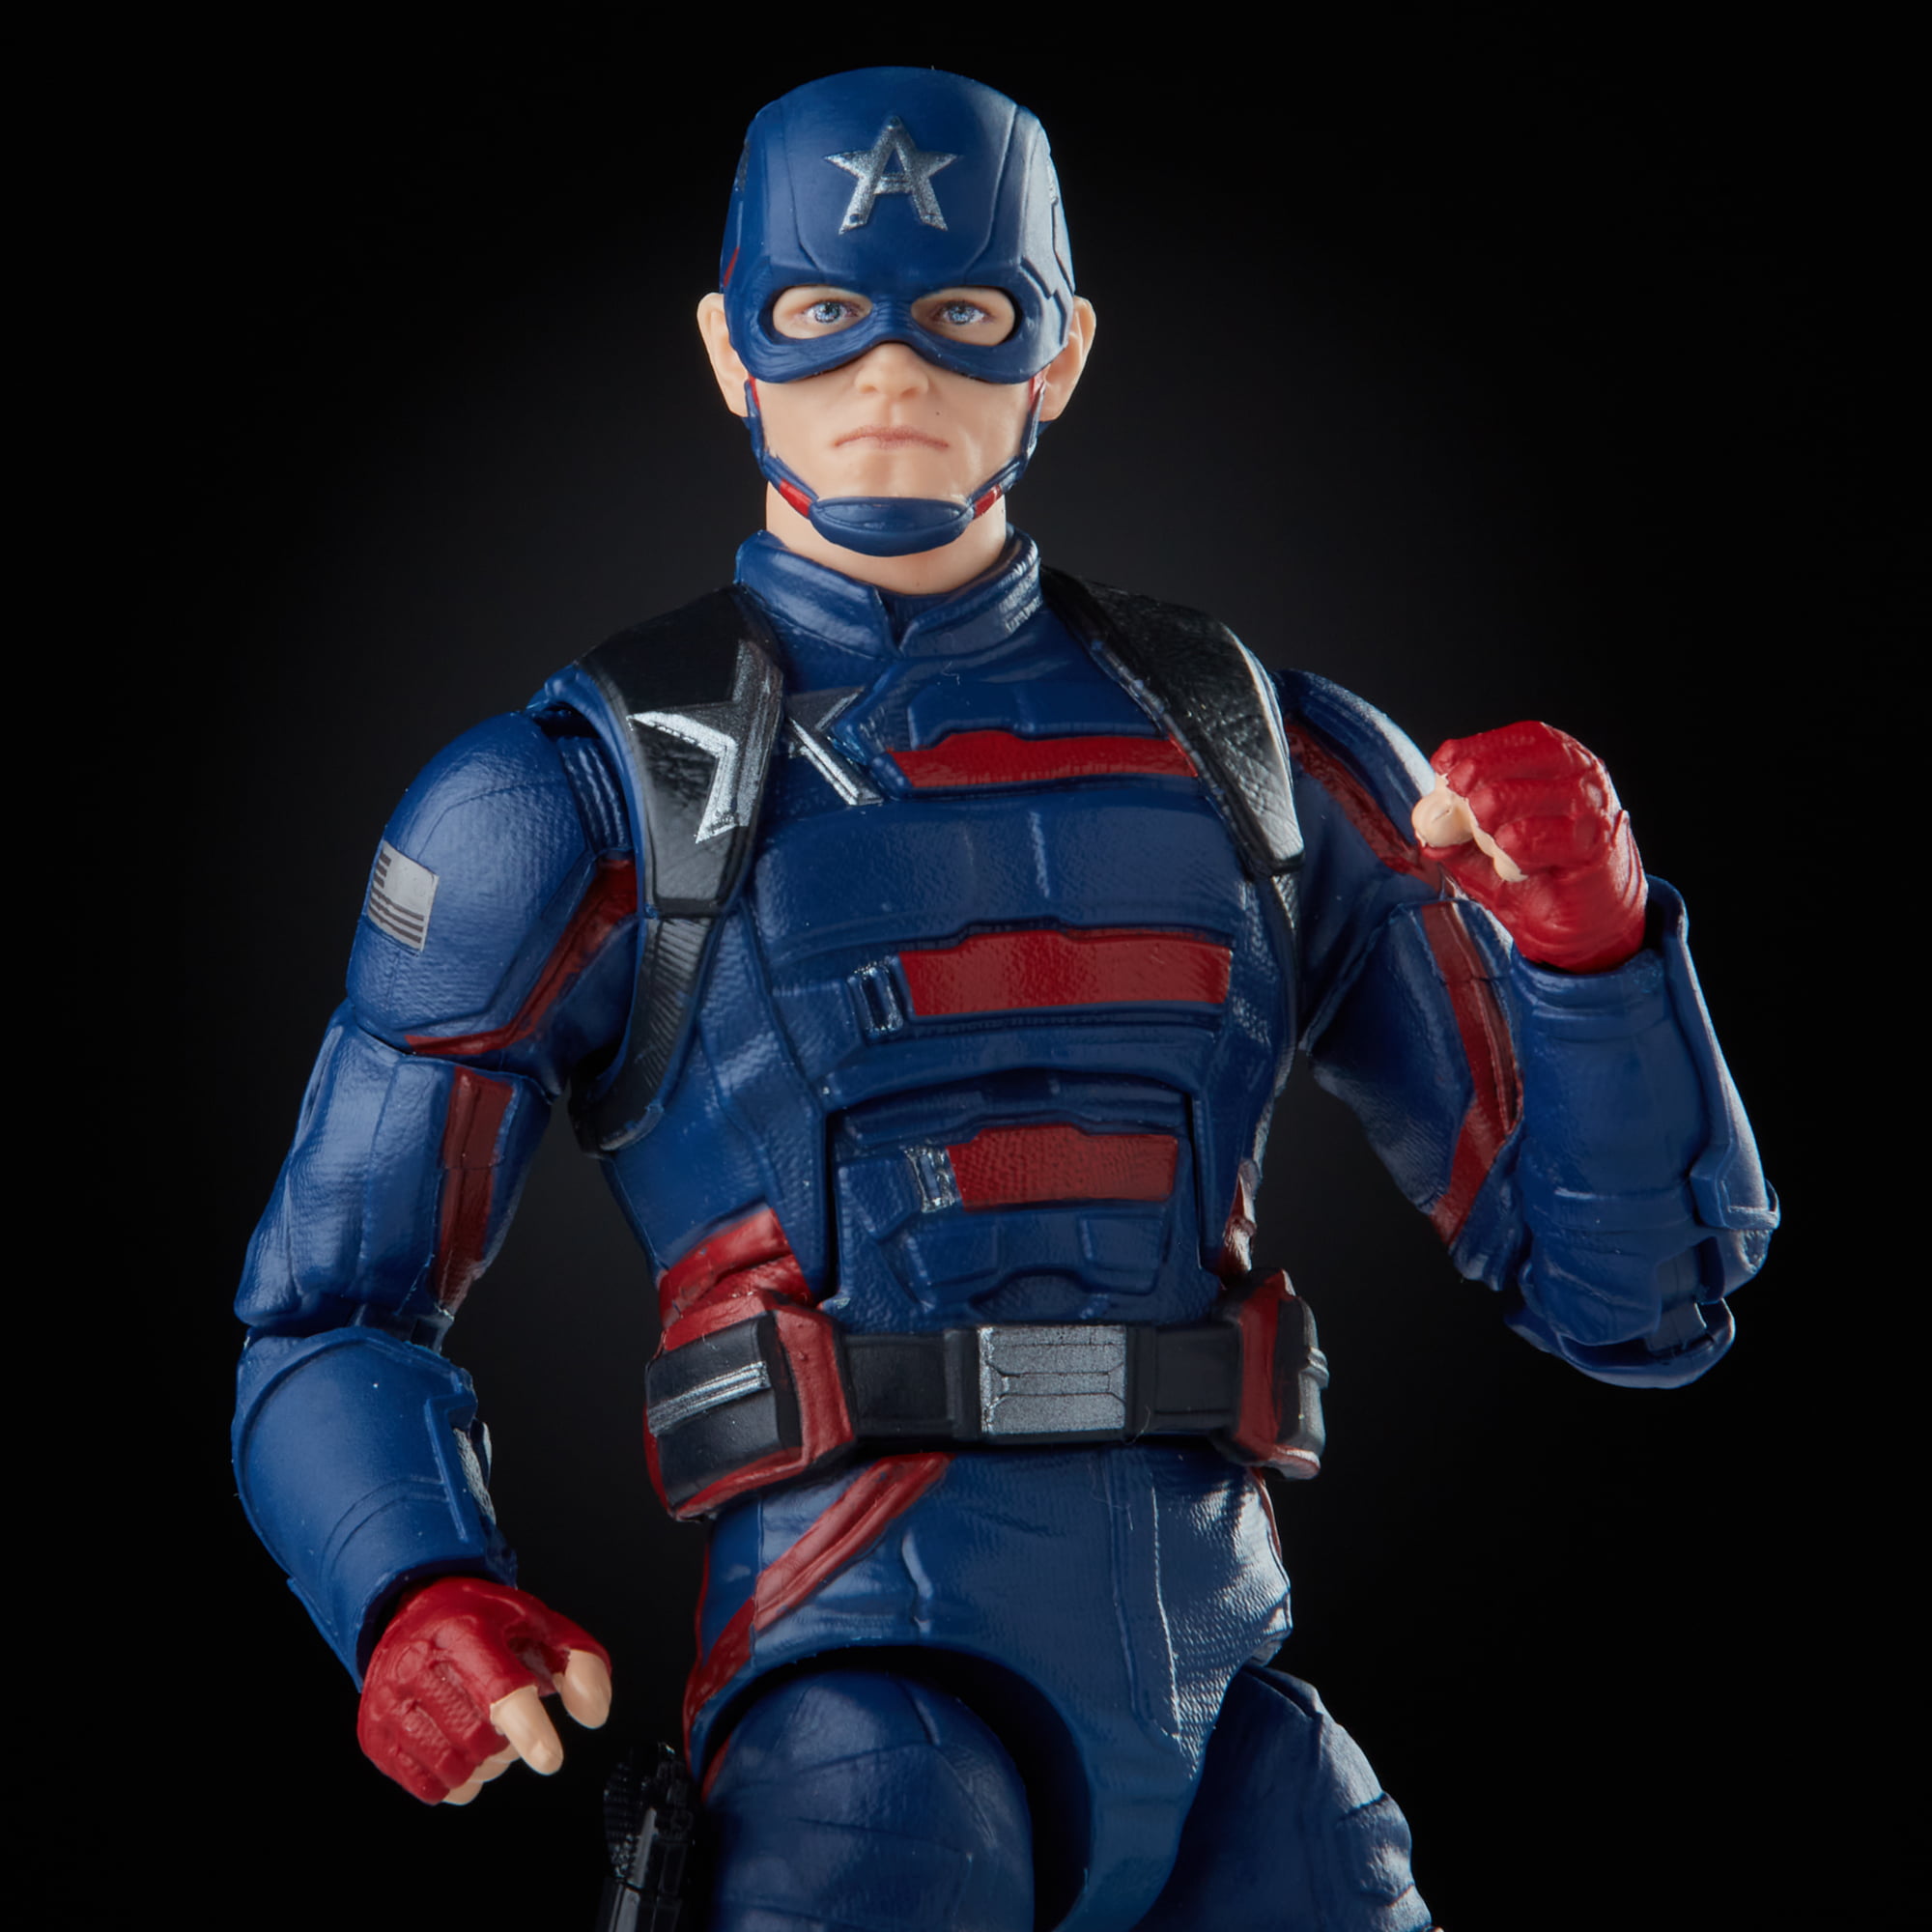 Marvel Legends Series Captain America John F Walker 15cm Neu